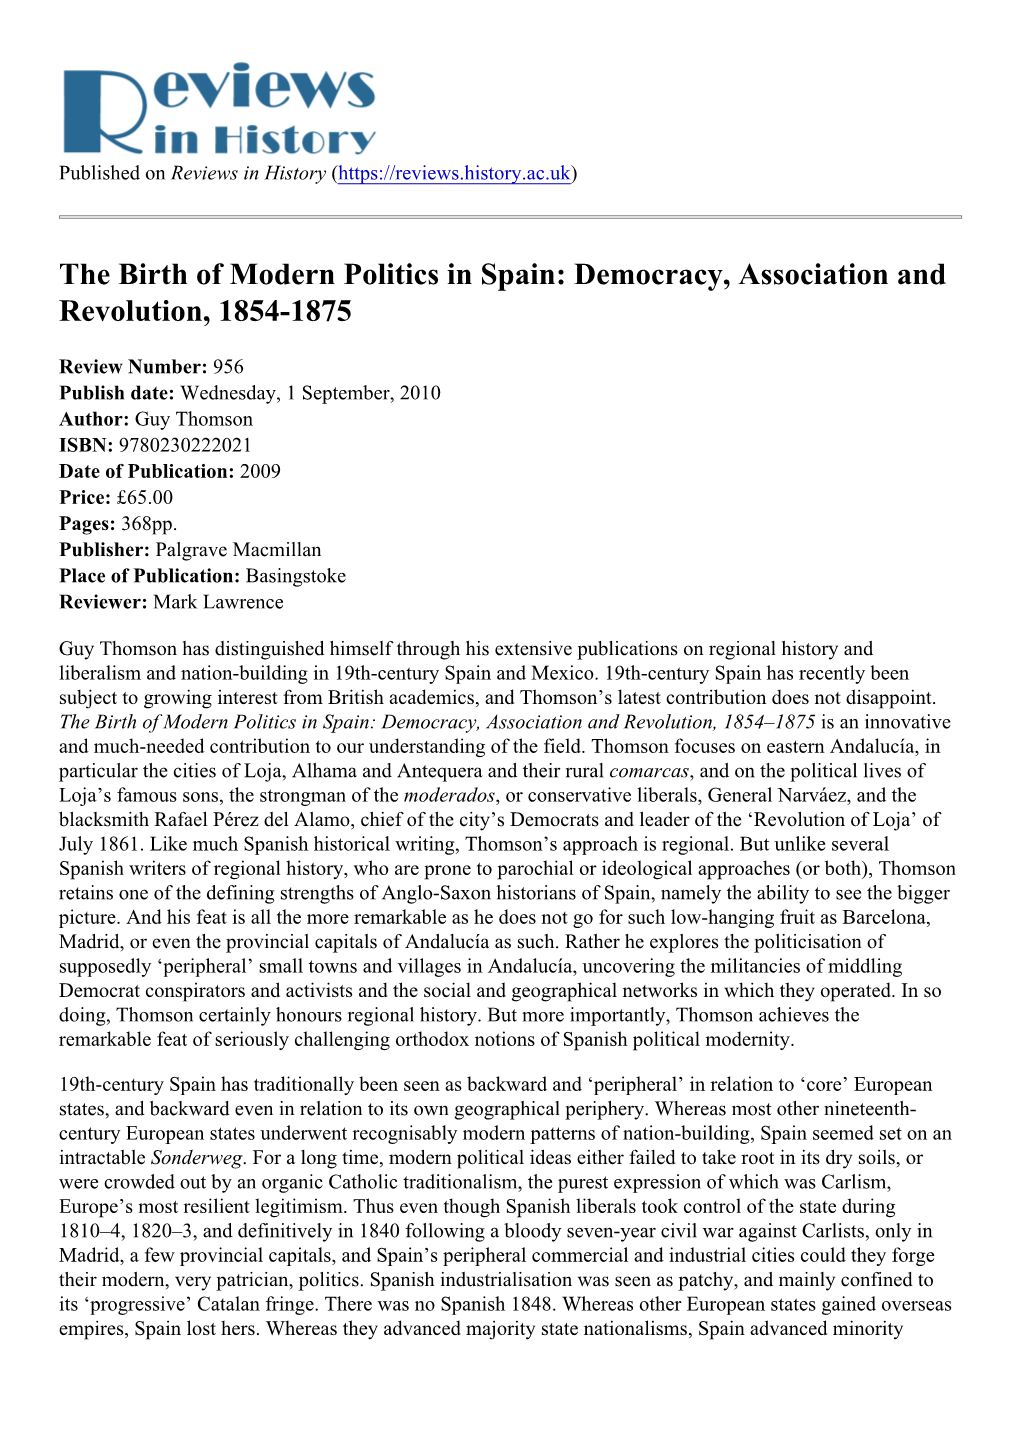 The Birth of Modern Politics in Spain: Democracy, Association and Revolution, 1854-1875